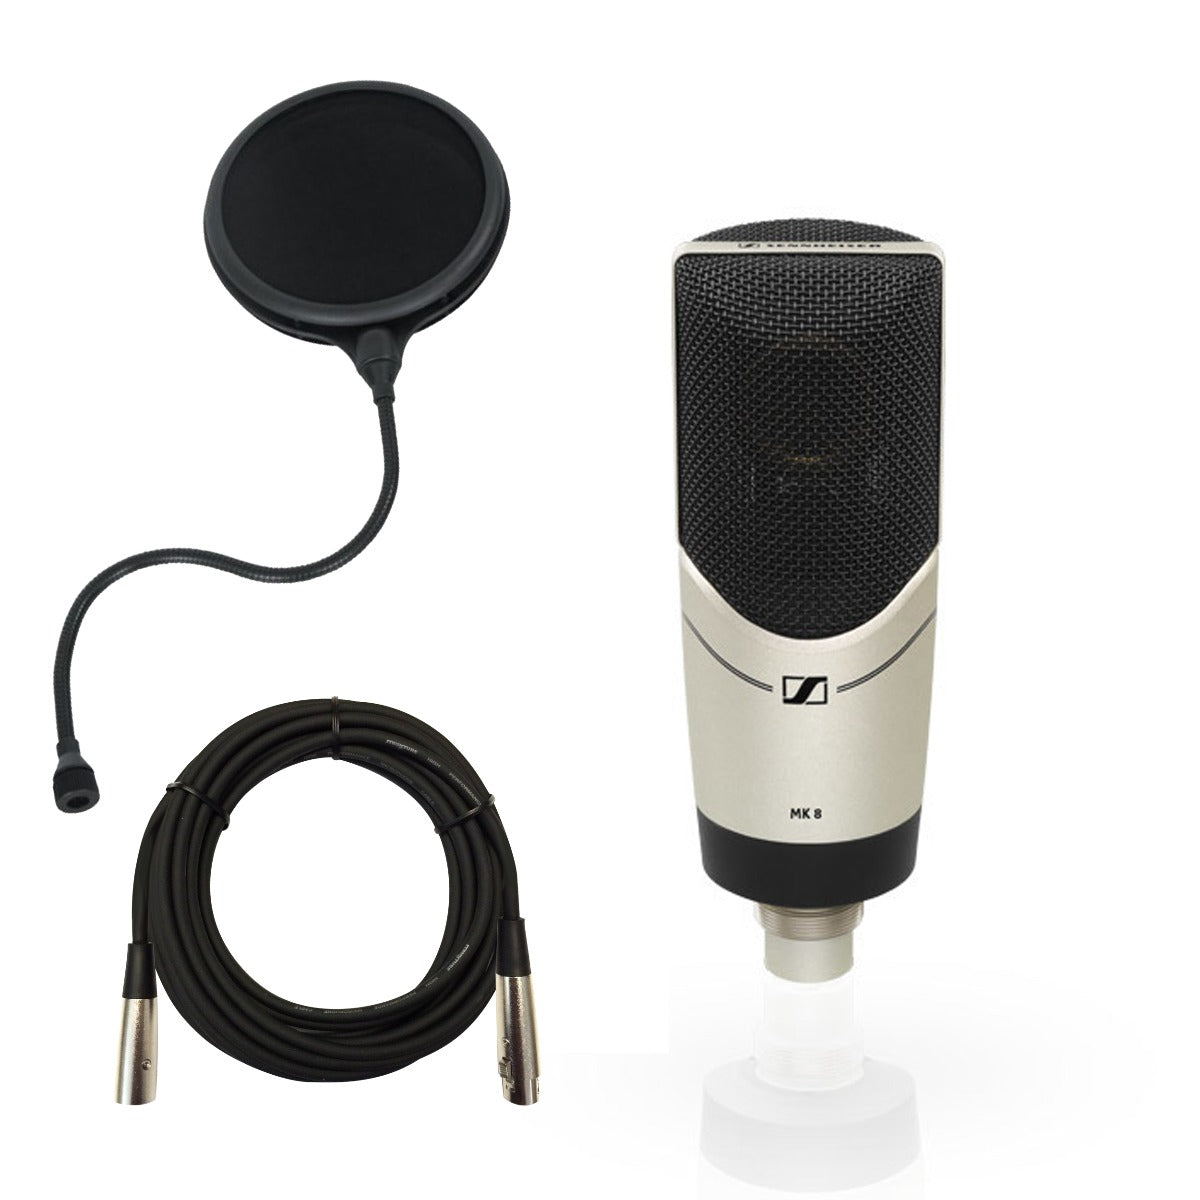 Sennheiser MK 8 Dual-Diaphragm Condenser Microphone BONUS PAK